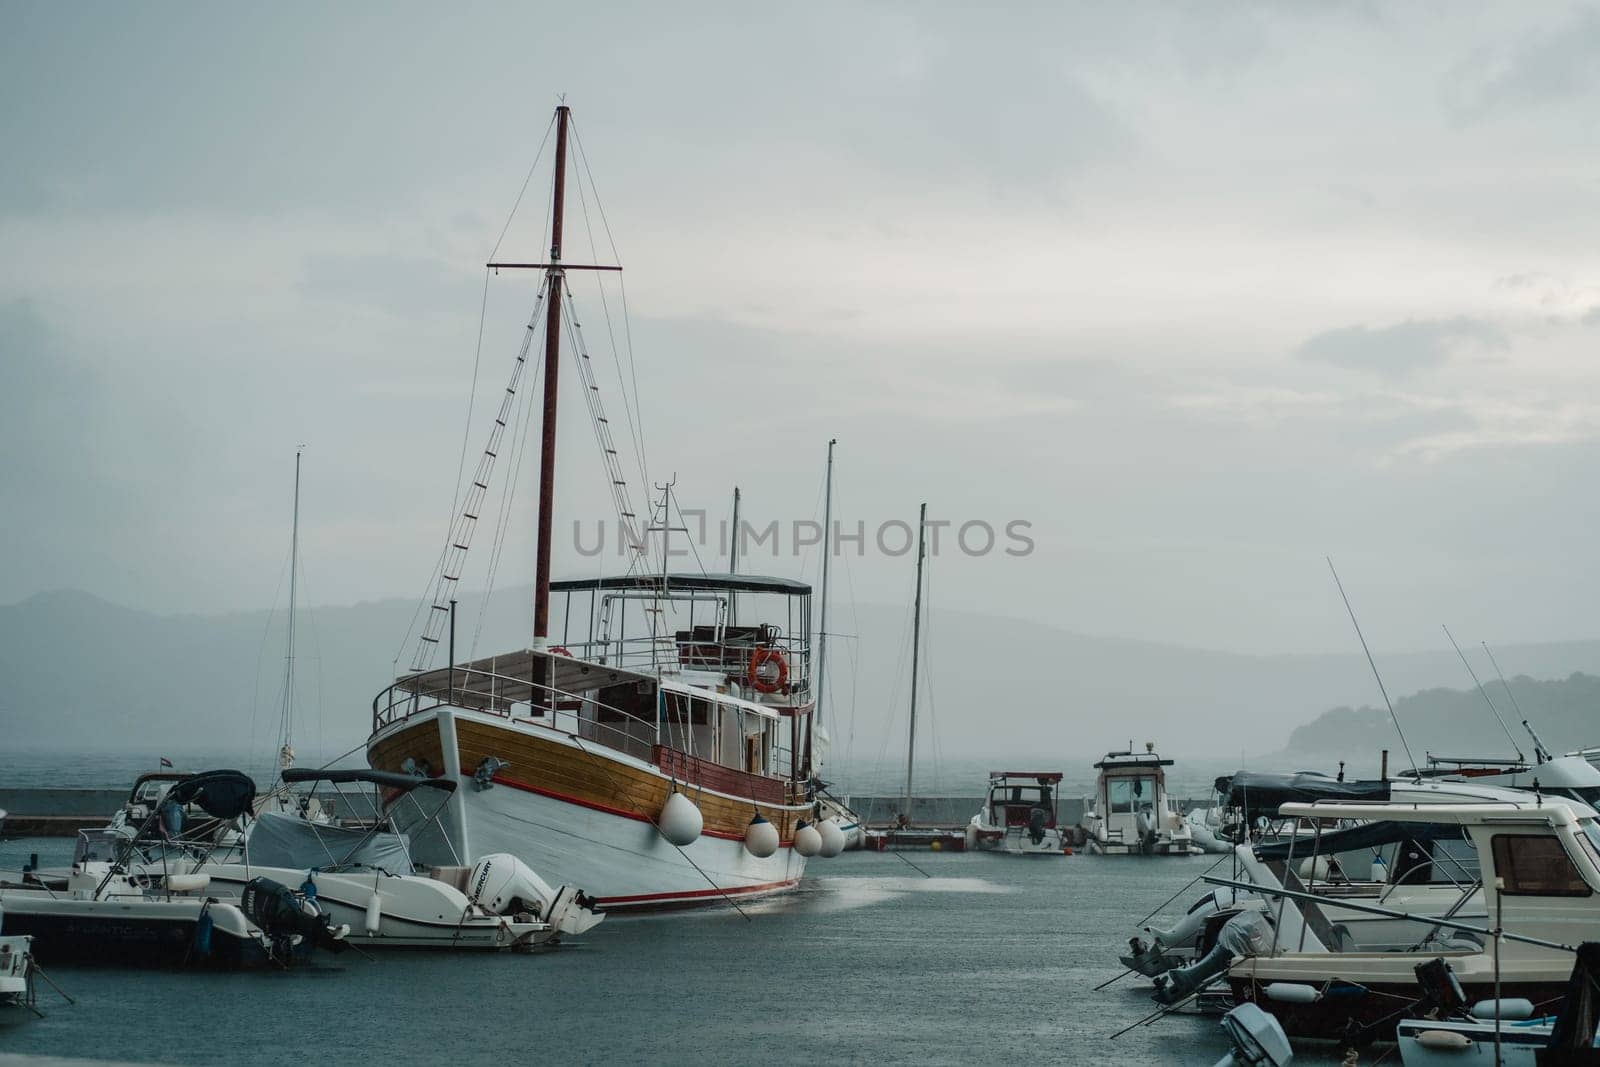 Sloop rigged sailboats moored to pier in Biograd na Moru of Croatia by Popov